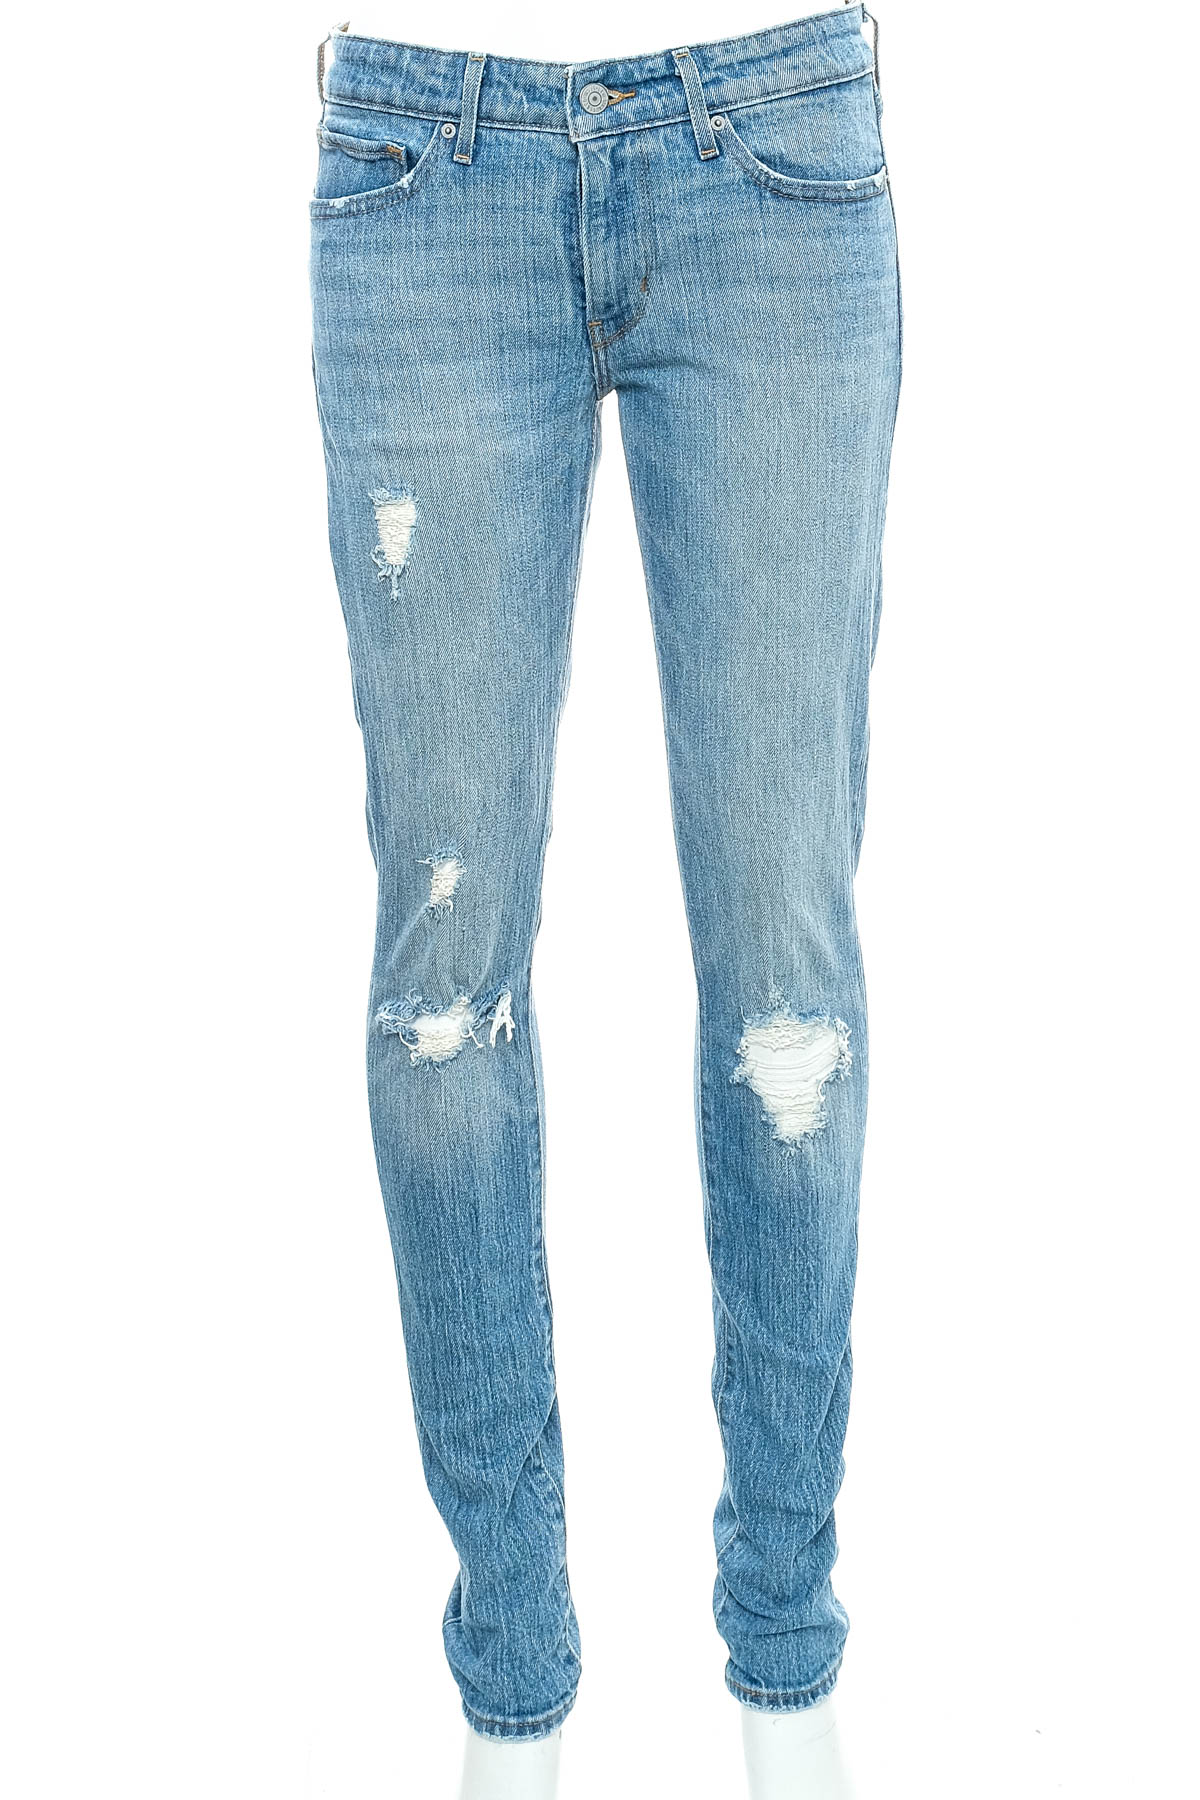 Women's jeans - Levi Strauss & Co. - 0